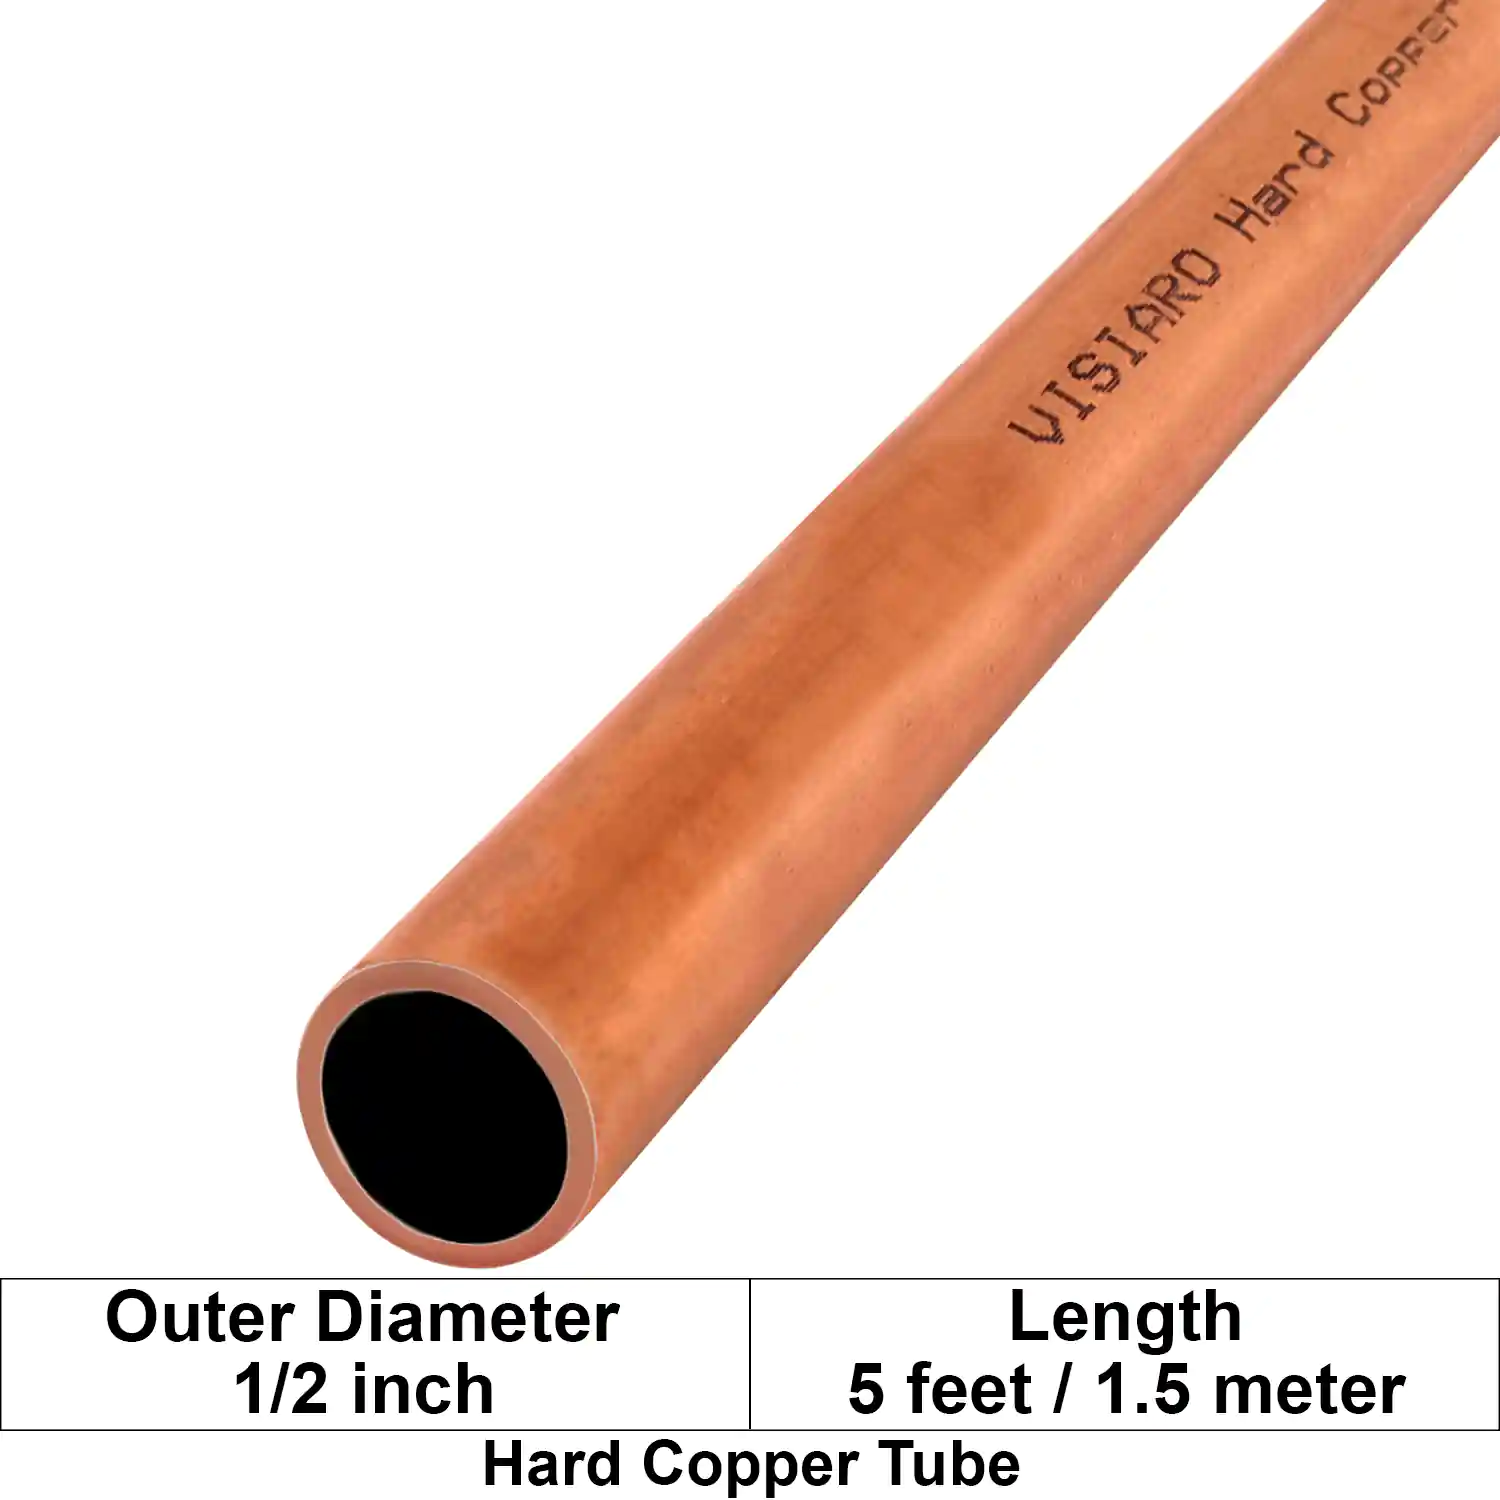 Visiaro Hard Copper Tube 5 feet long Outer Diameter - 1/2 inch